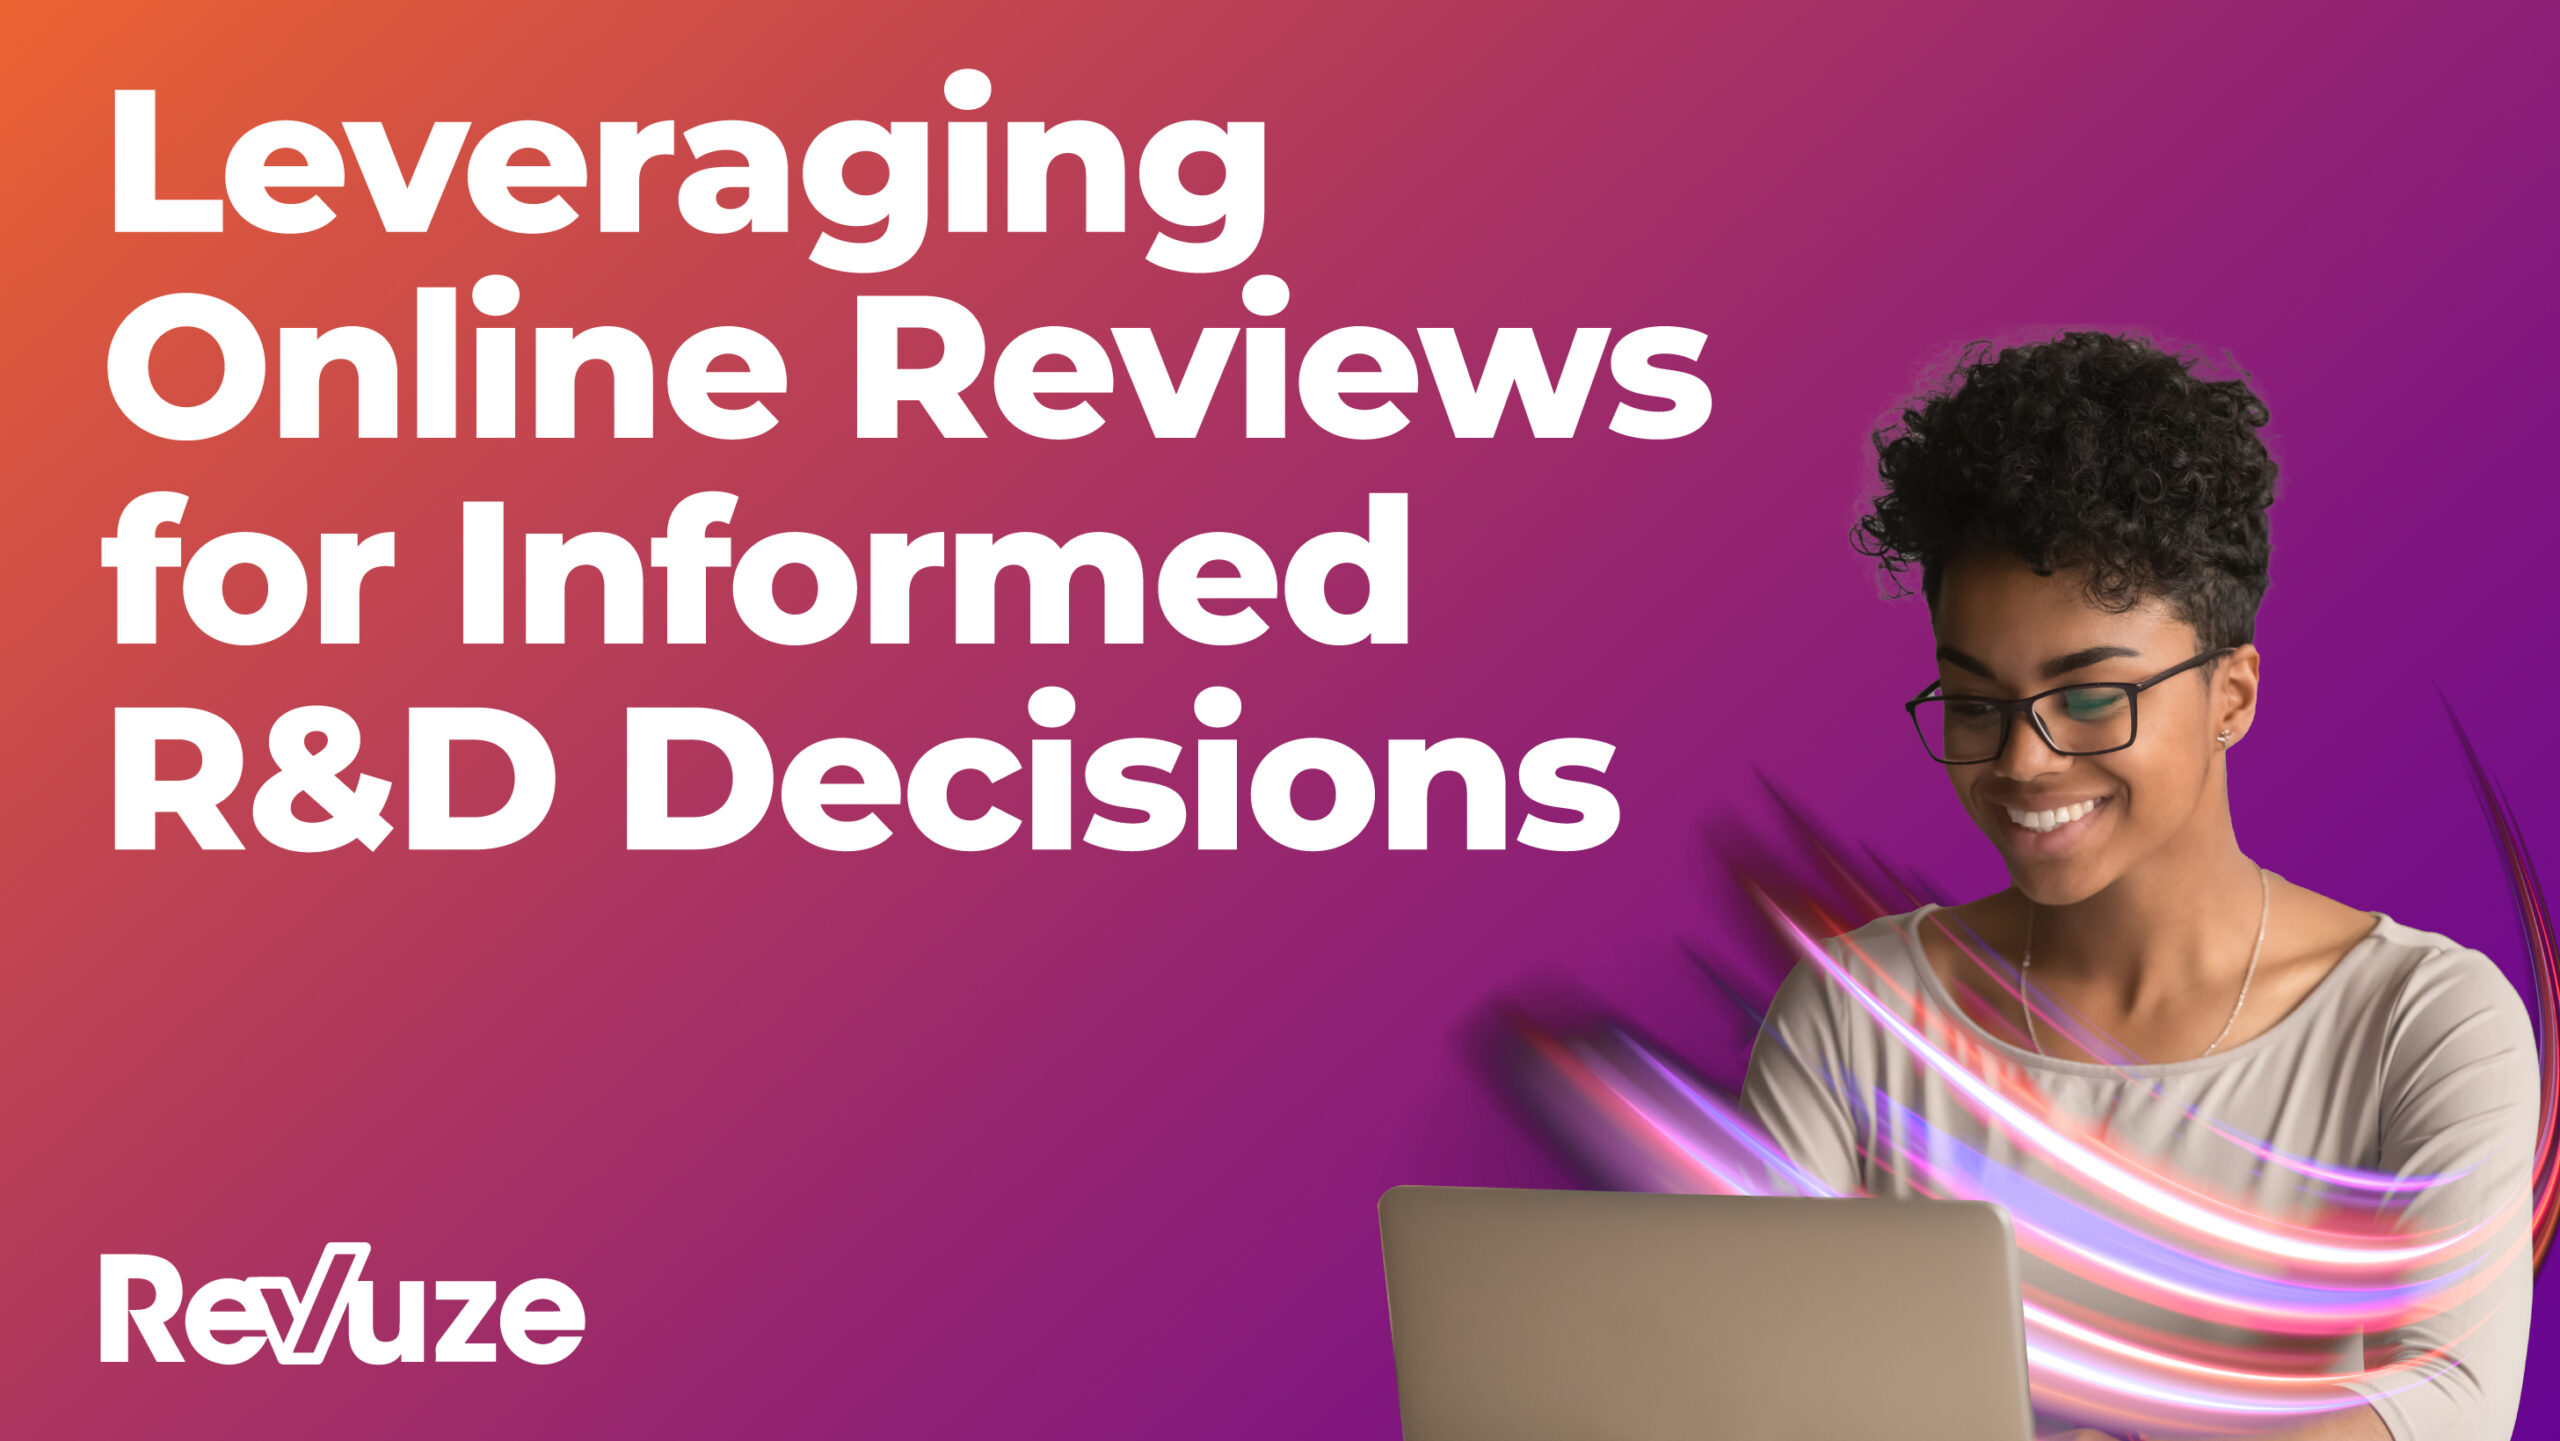 Leveraging Online Reviews for Informed R&D Decisions